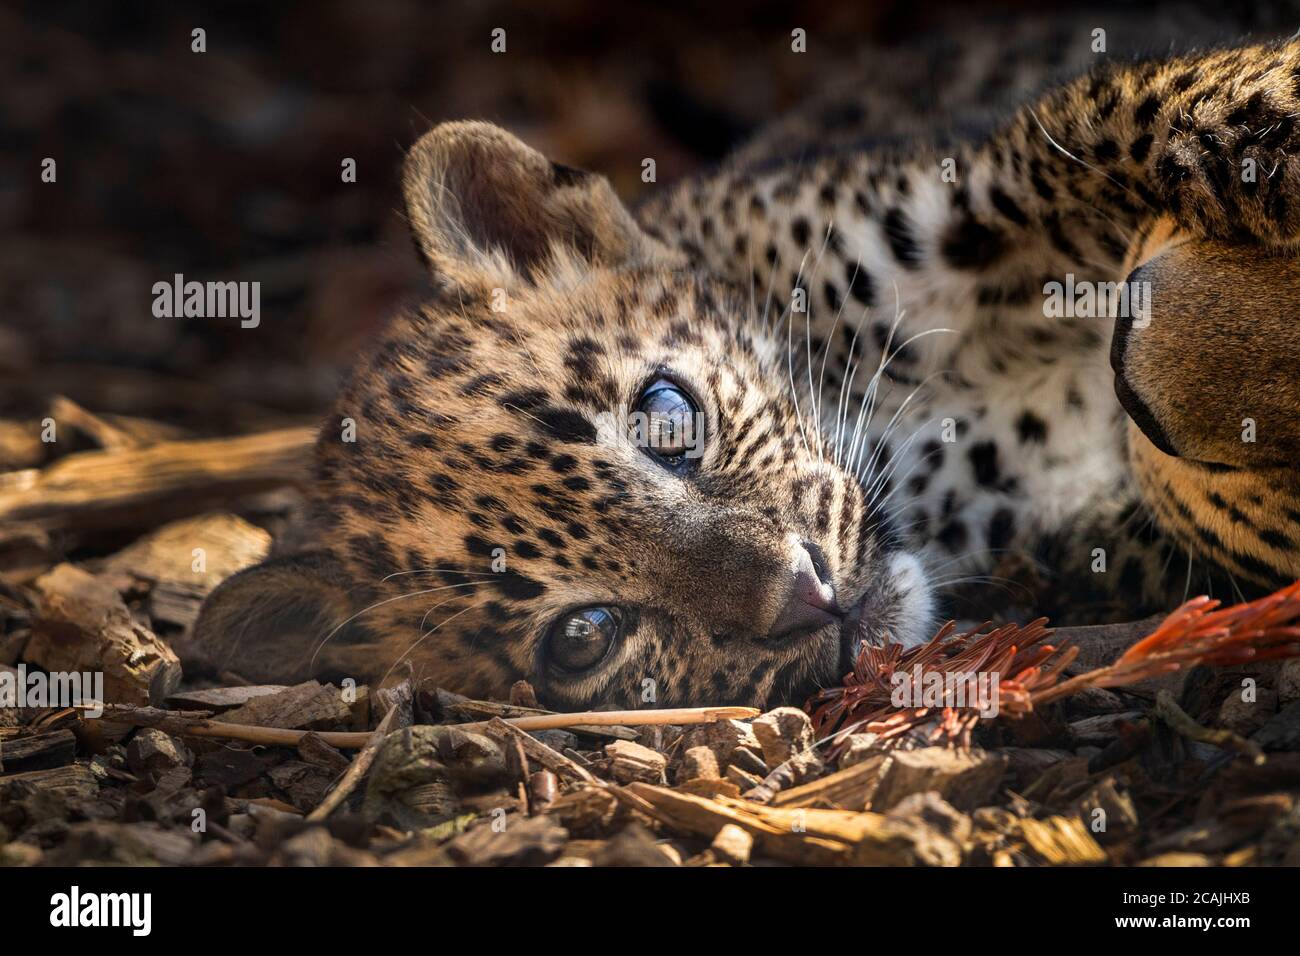 Sri Lankan leopard cub gazing into camera Stock Photo